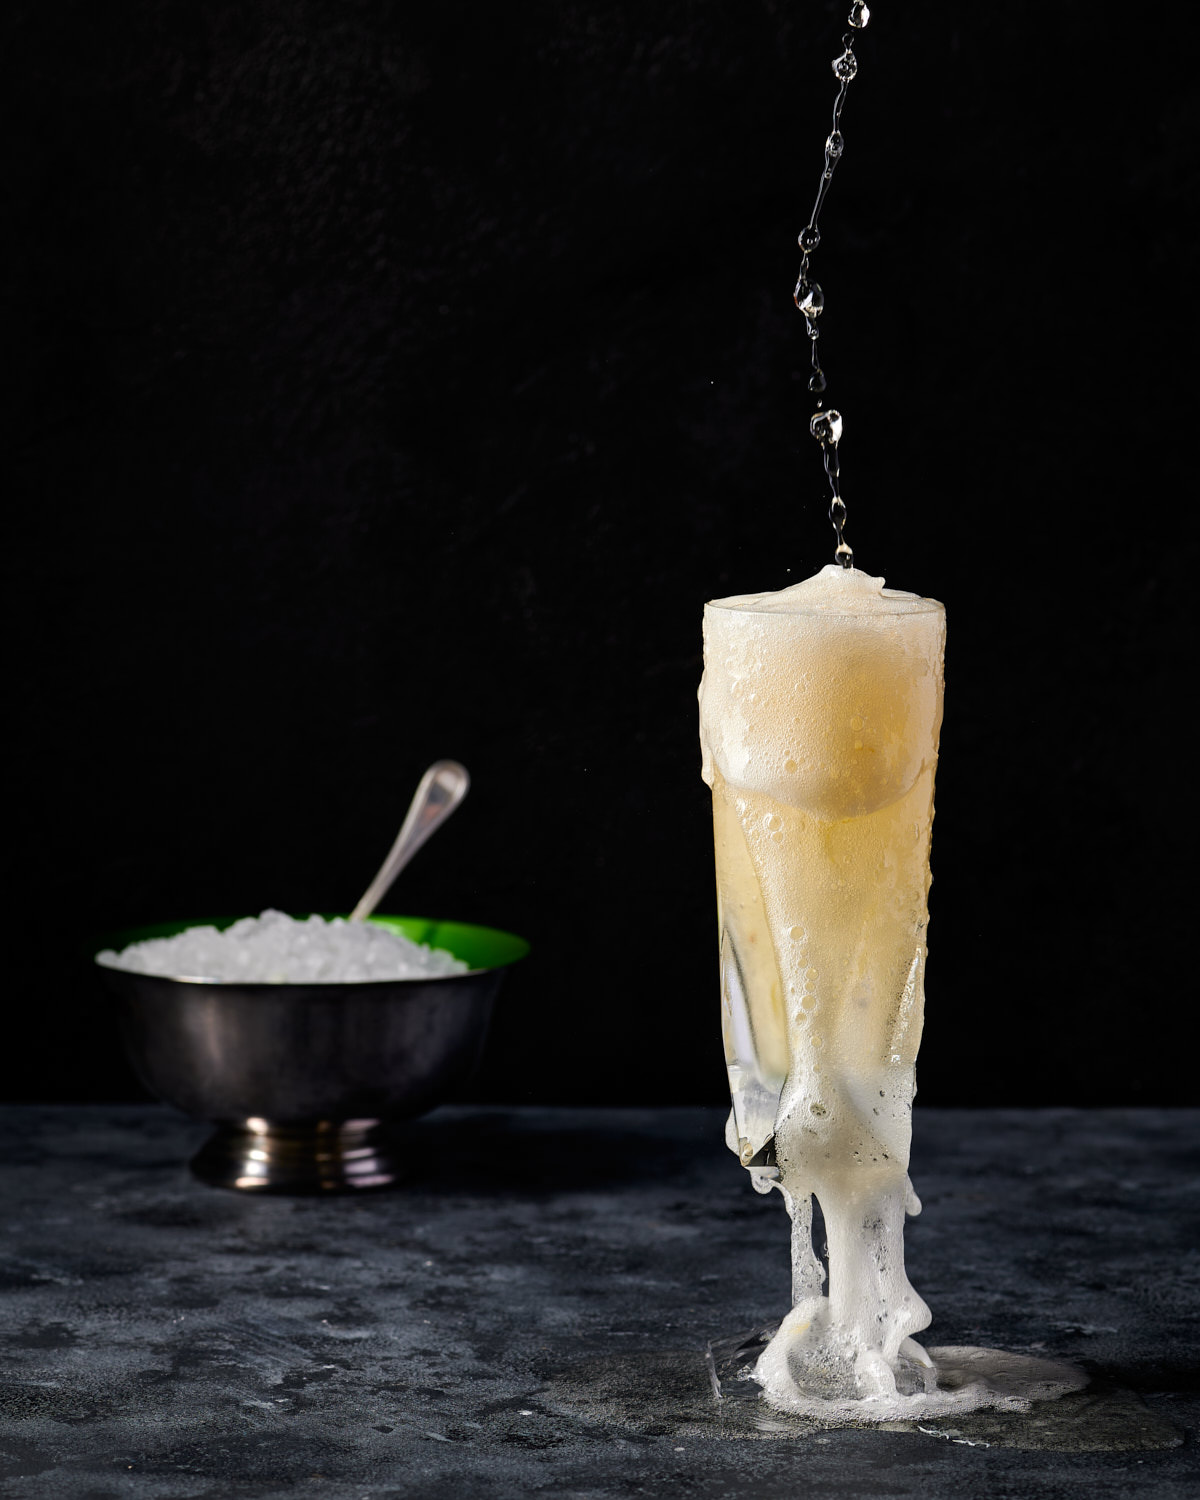 Editorial Cookbook Food Photography of Champagne Frappé à la Glace